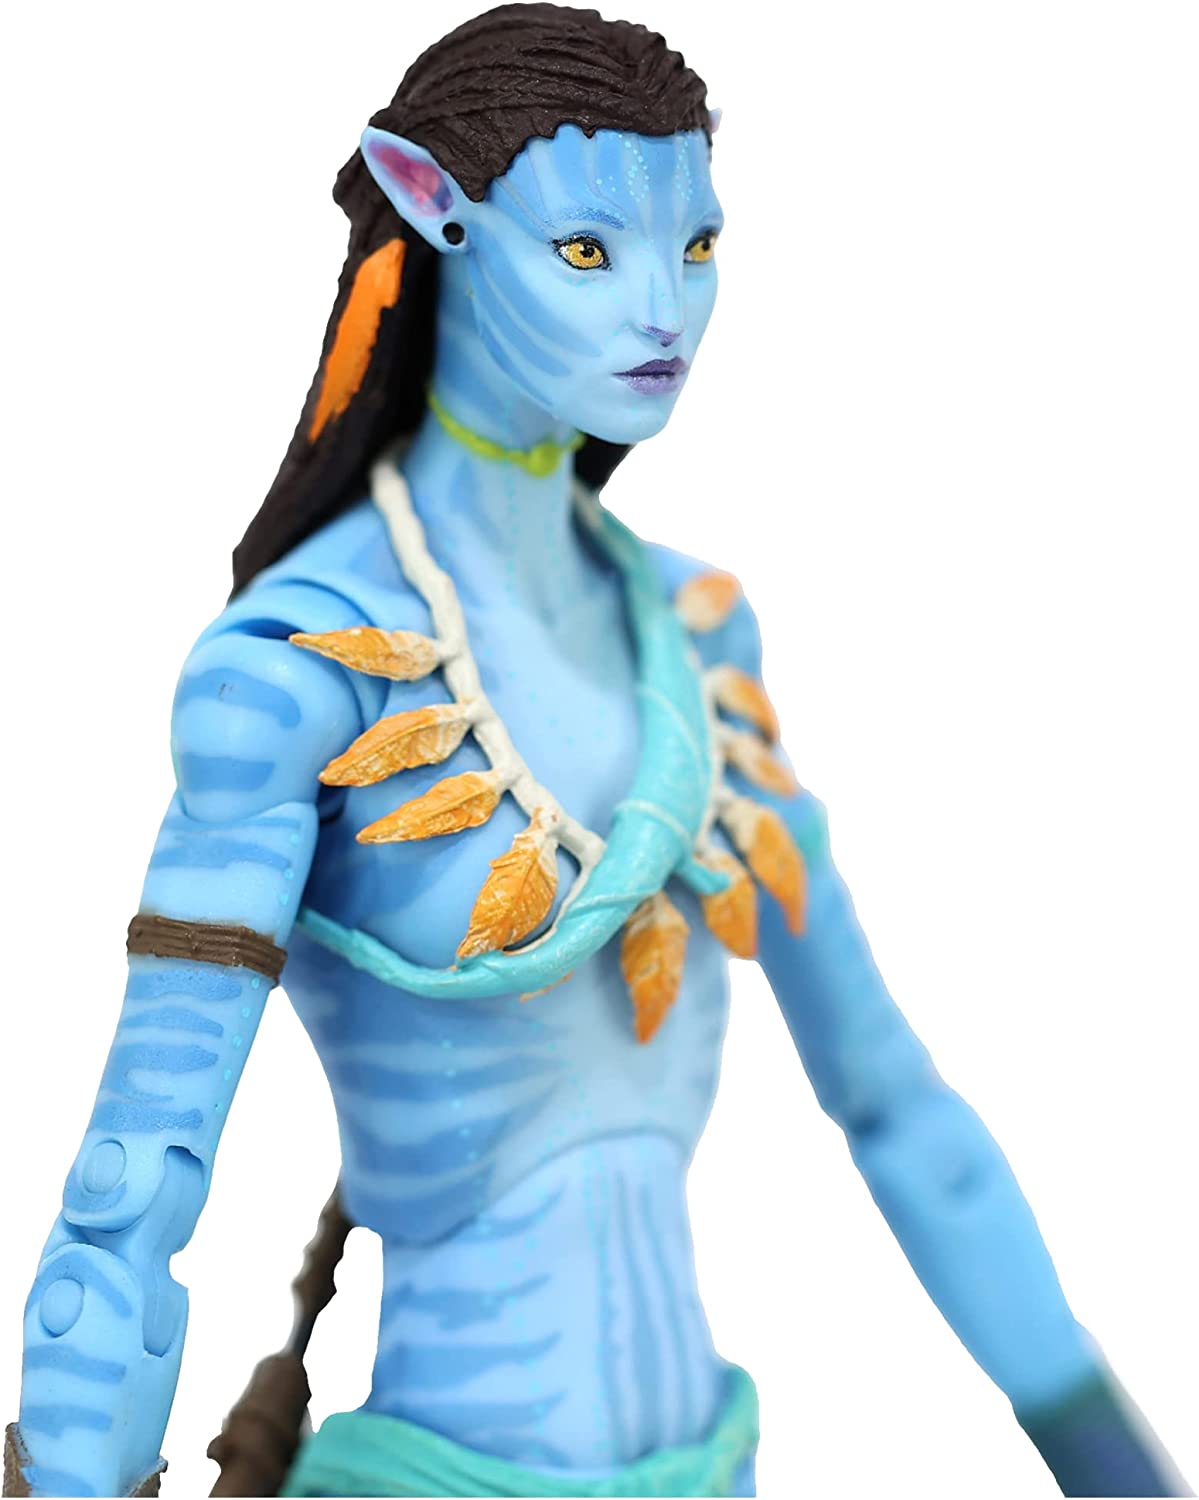 Mcfarlane Toys Disney Avatar Classic Neytiri 7 Inch Action Figure